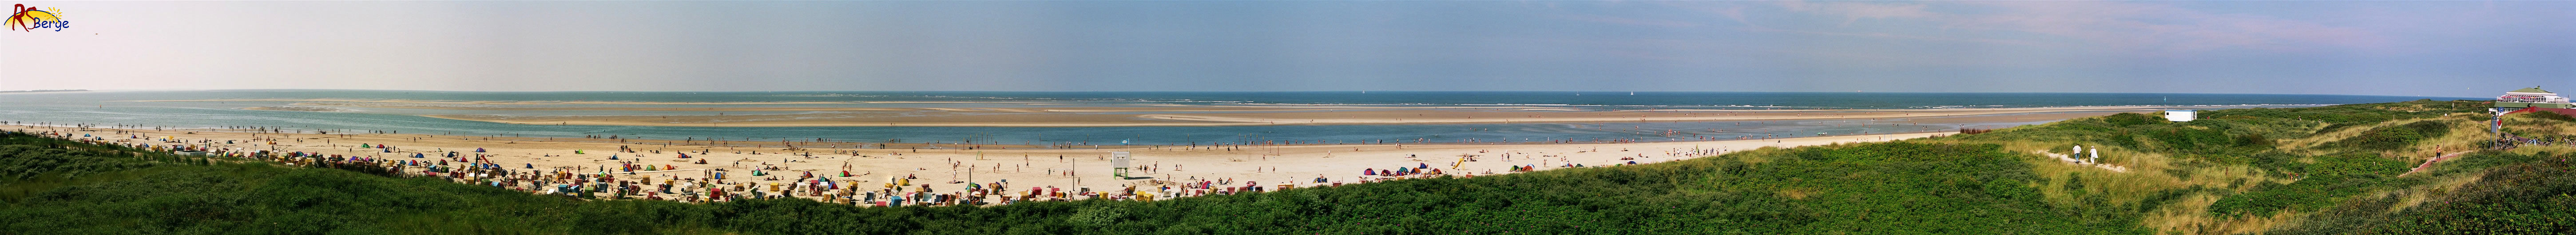 Langeoog - Panorama 1 Strand